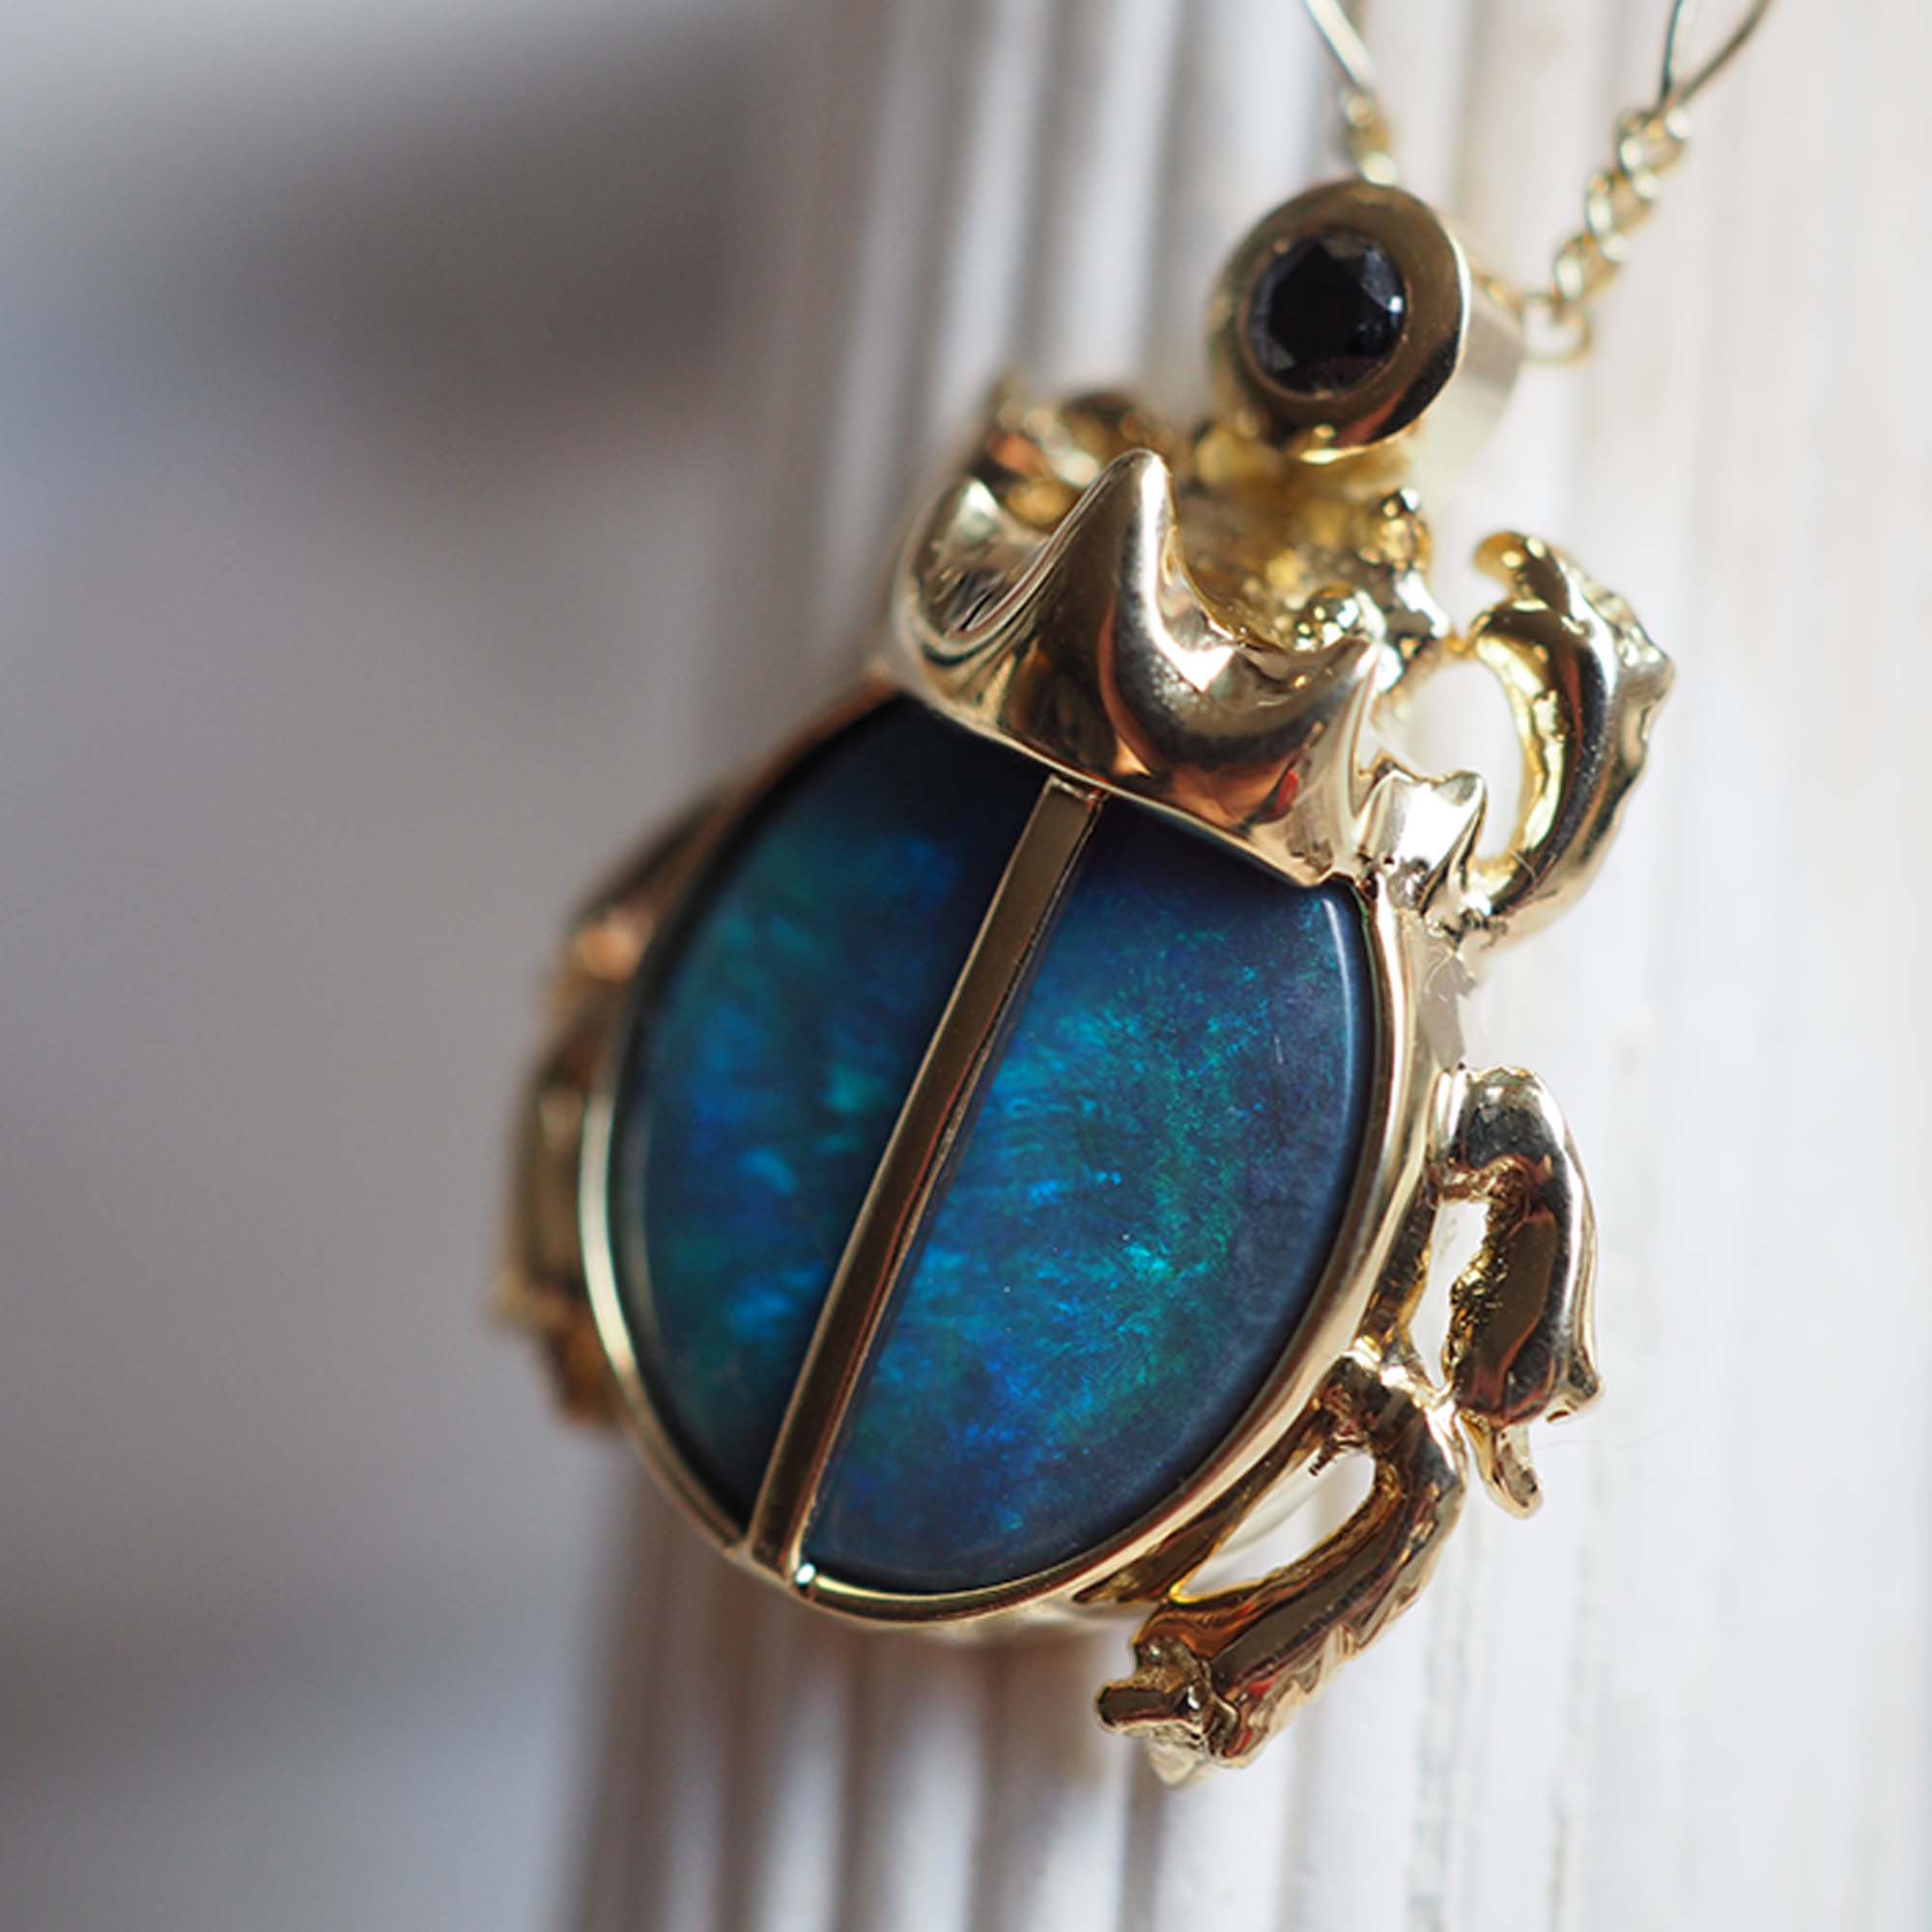 Heirloom Opal Scarab Necklace by Yasmin Everley